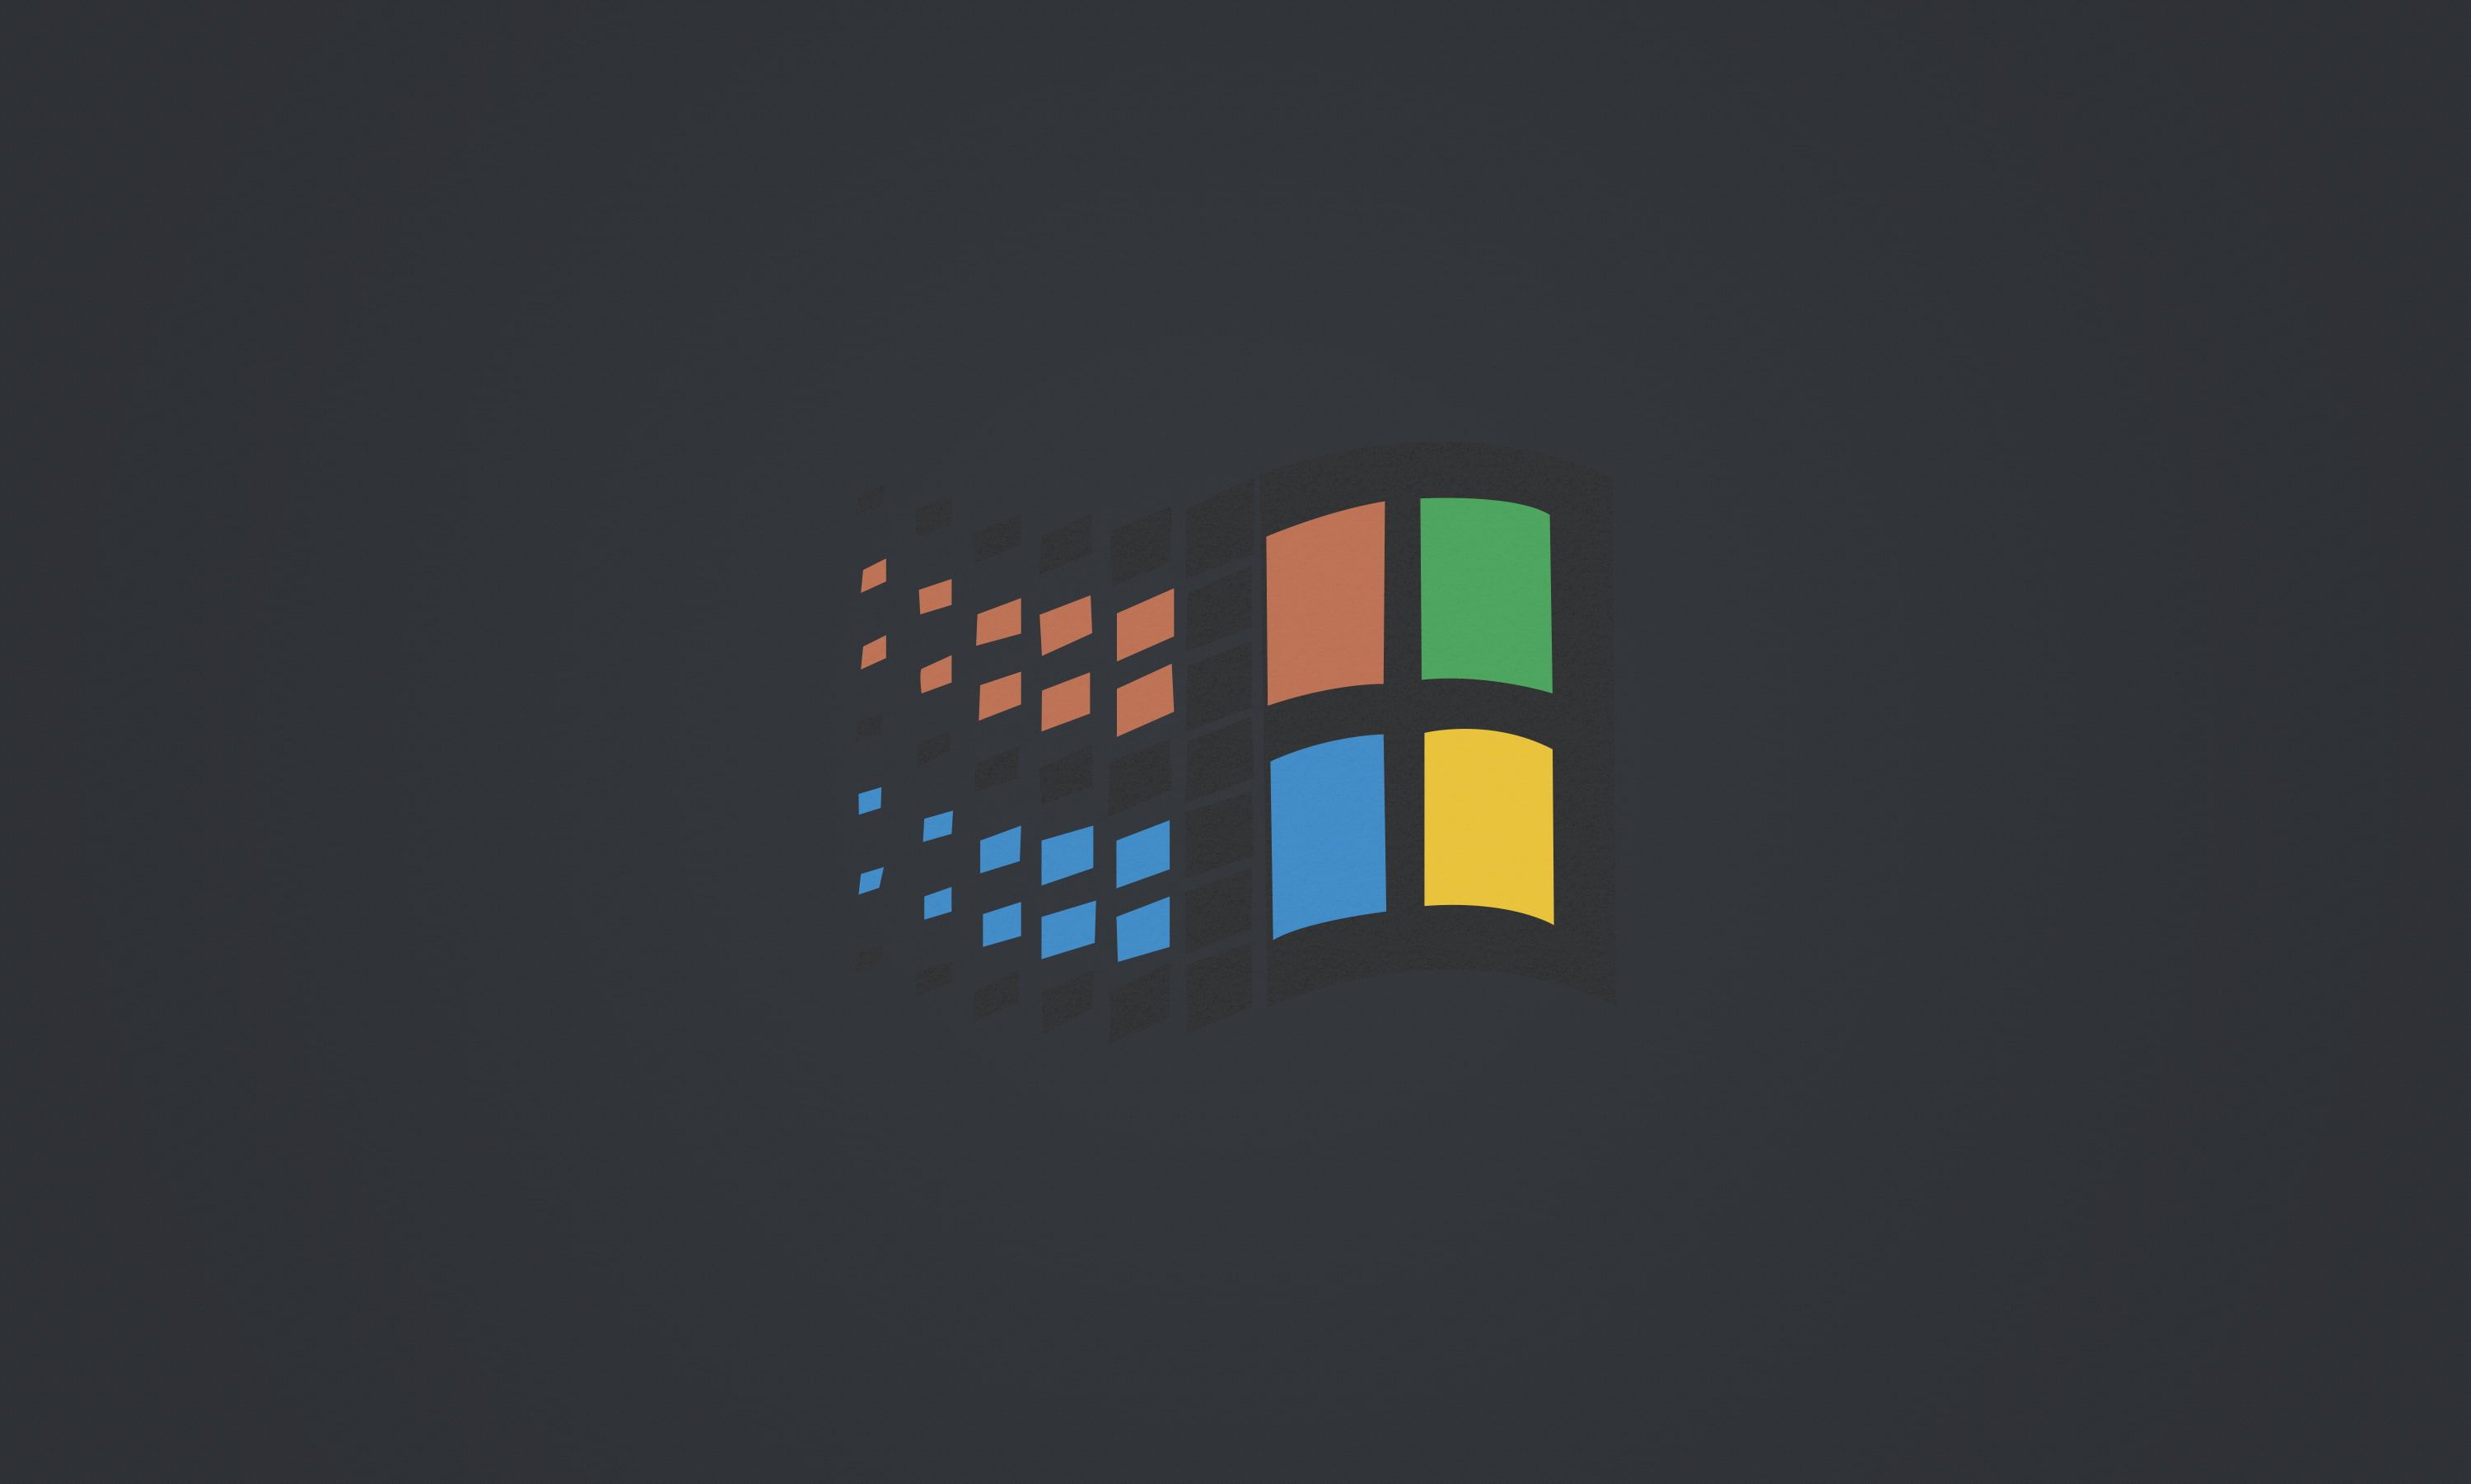 A colorful windows logo on black background - Windows 95